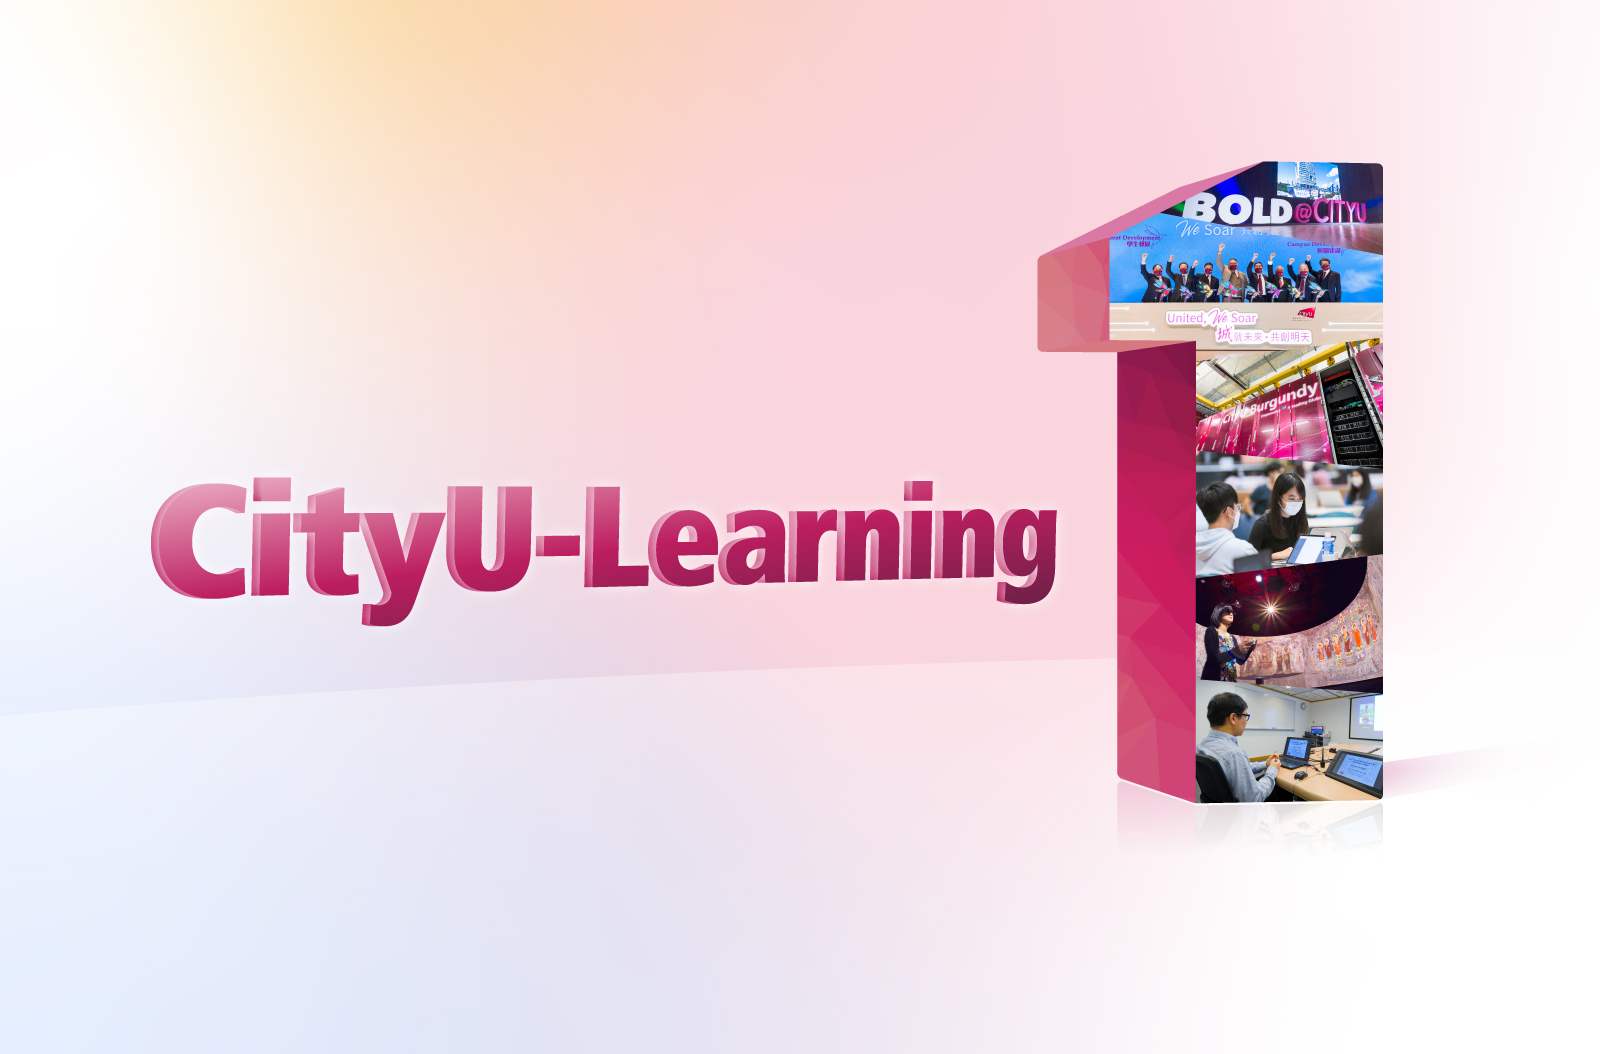 CityU-Learning 啟用一周年